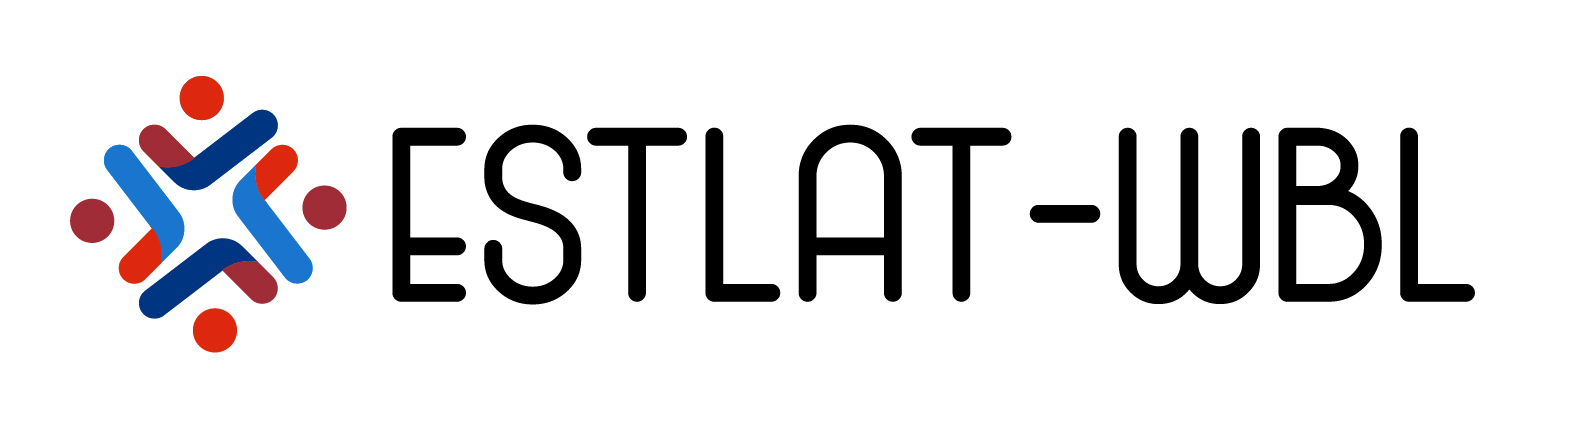 estlatwbl logo